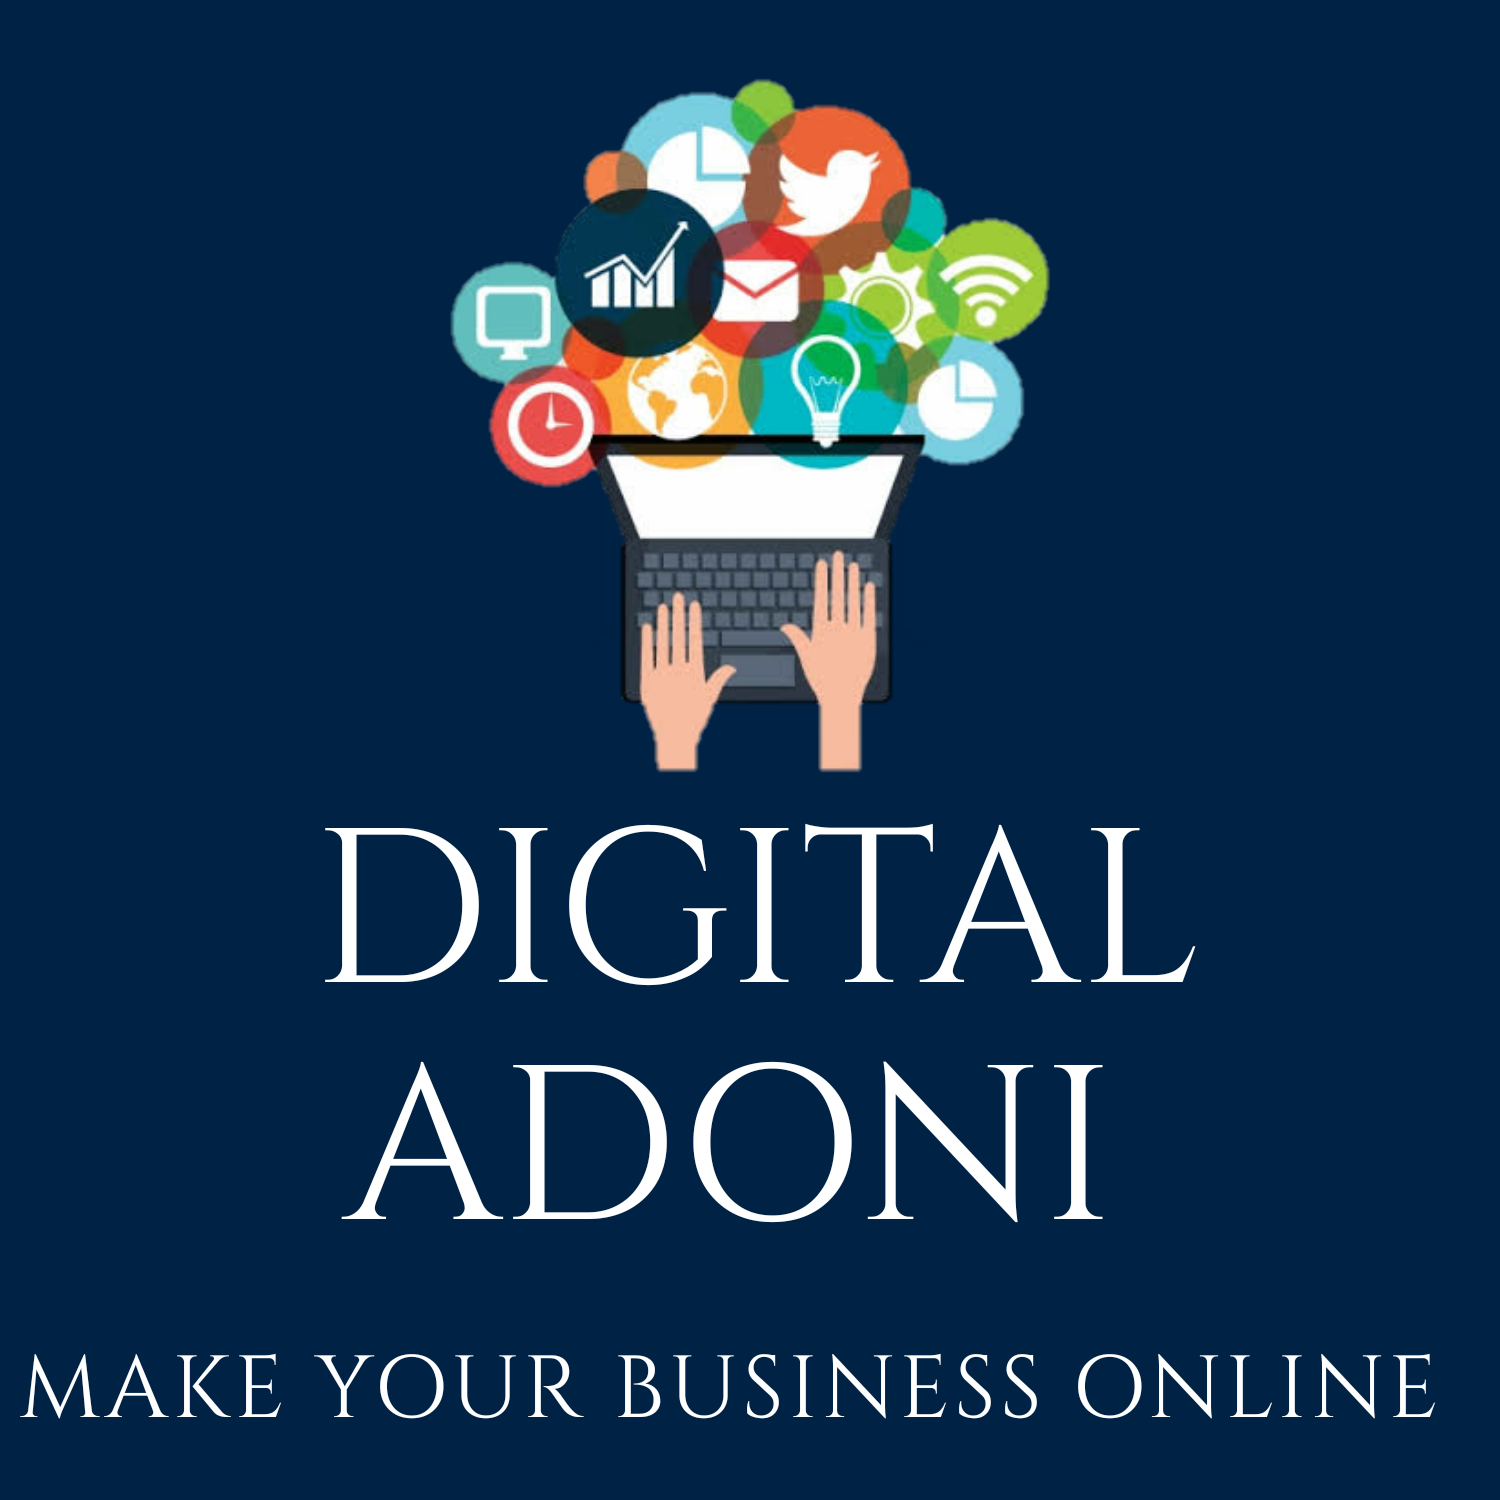 Welcome to Digital Adoni